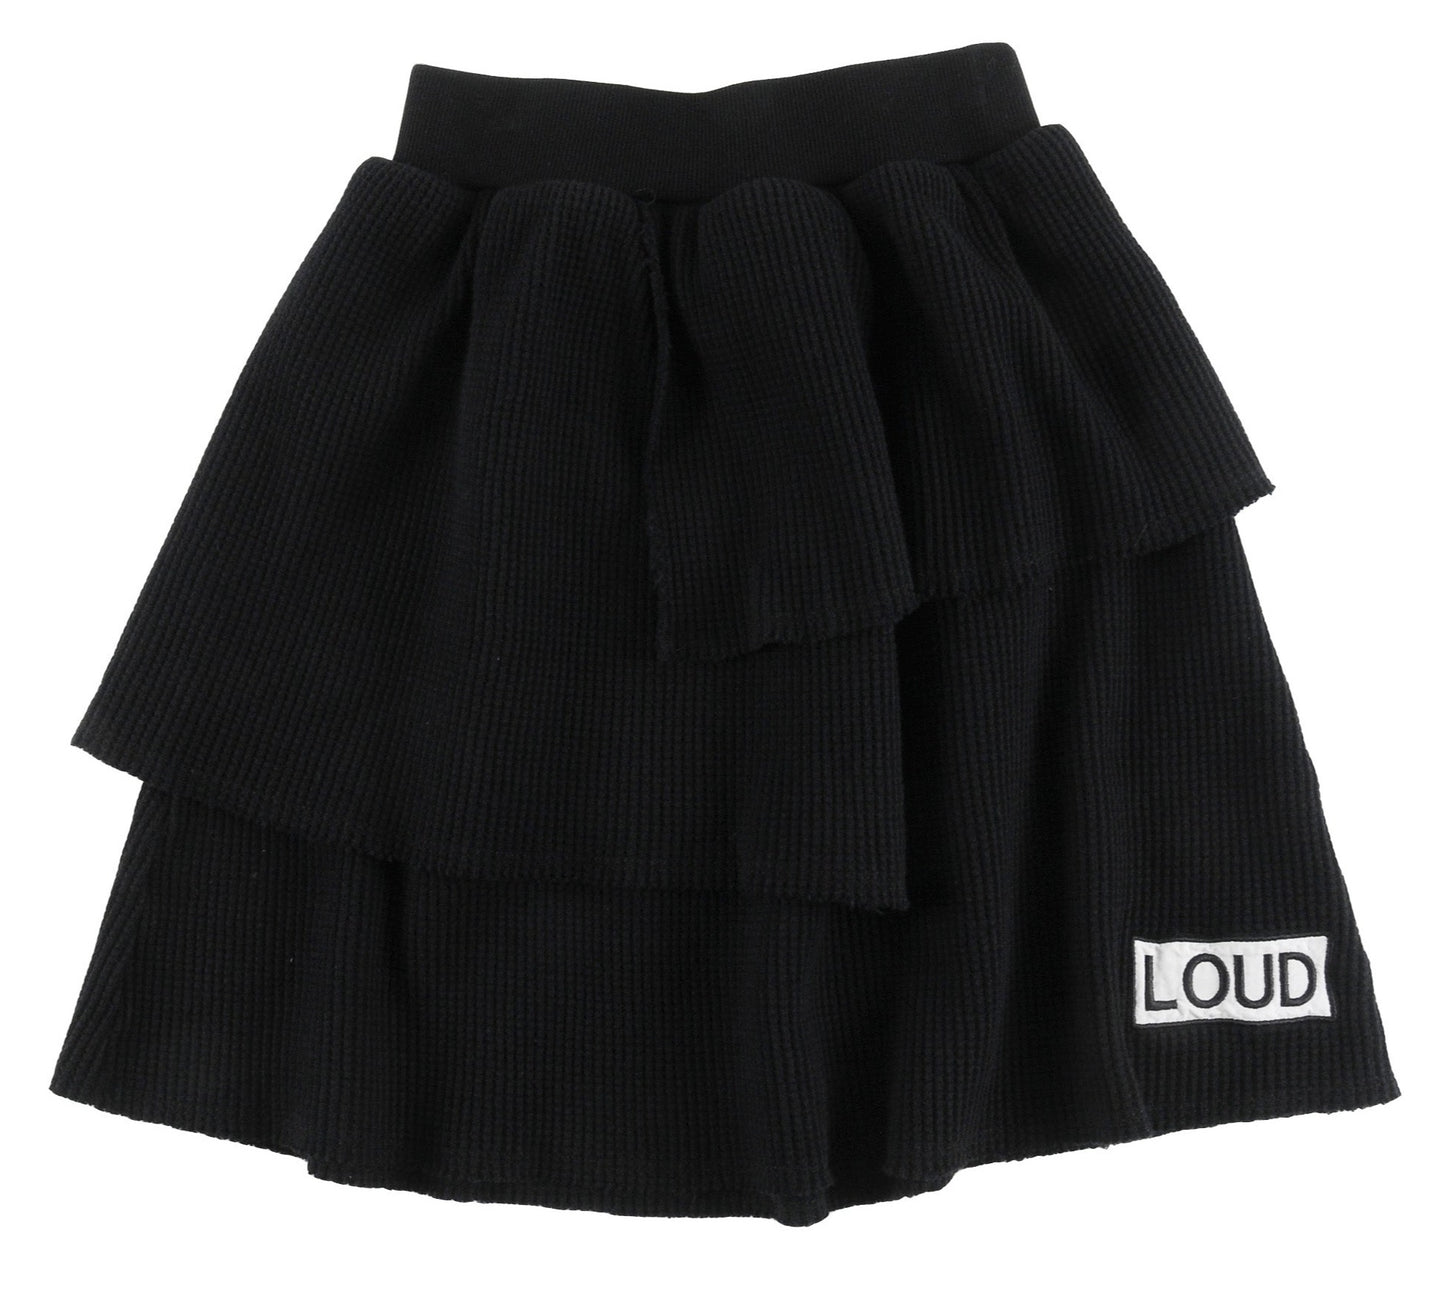 Loud Apparel Heart Skirt